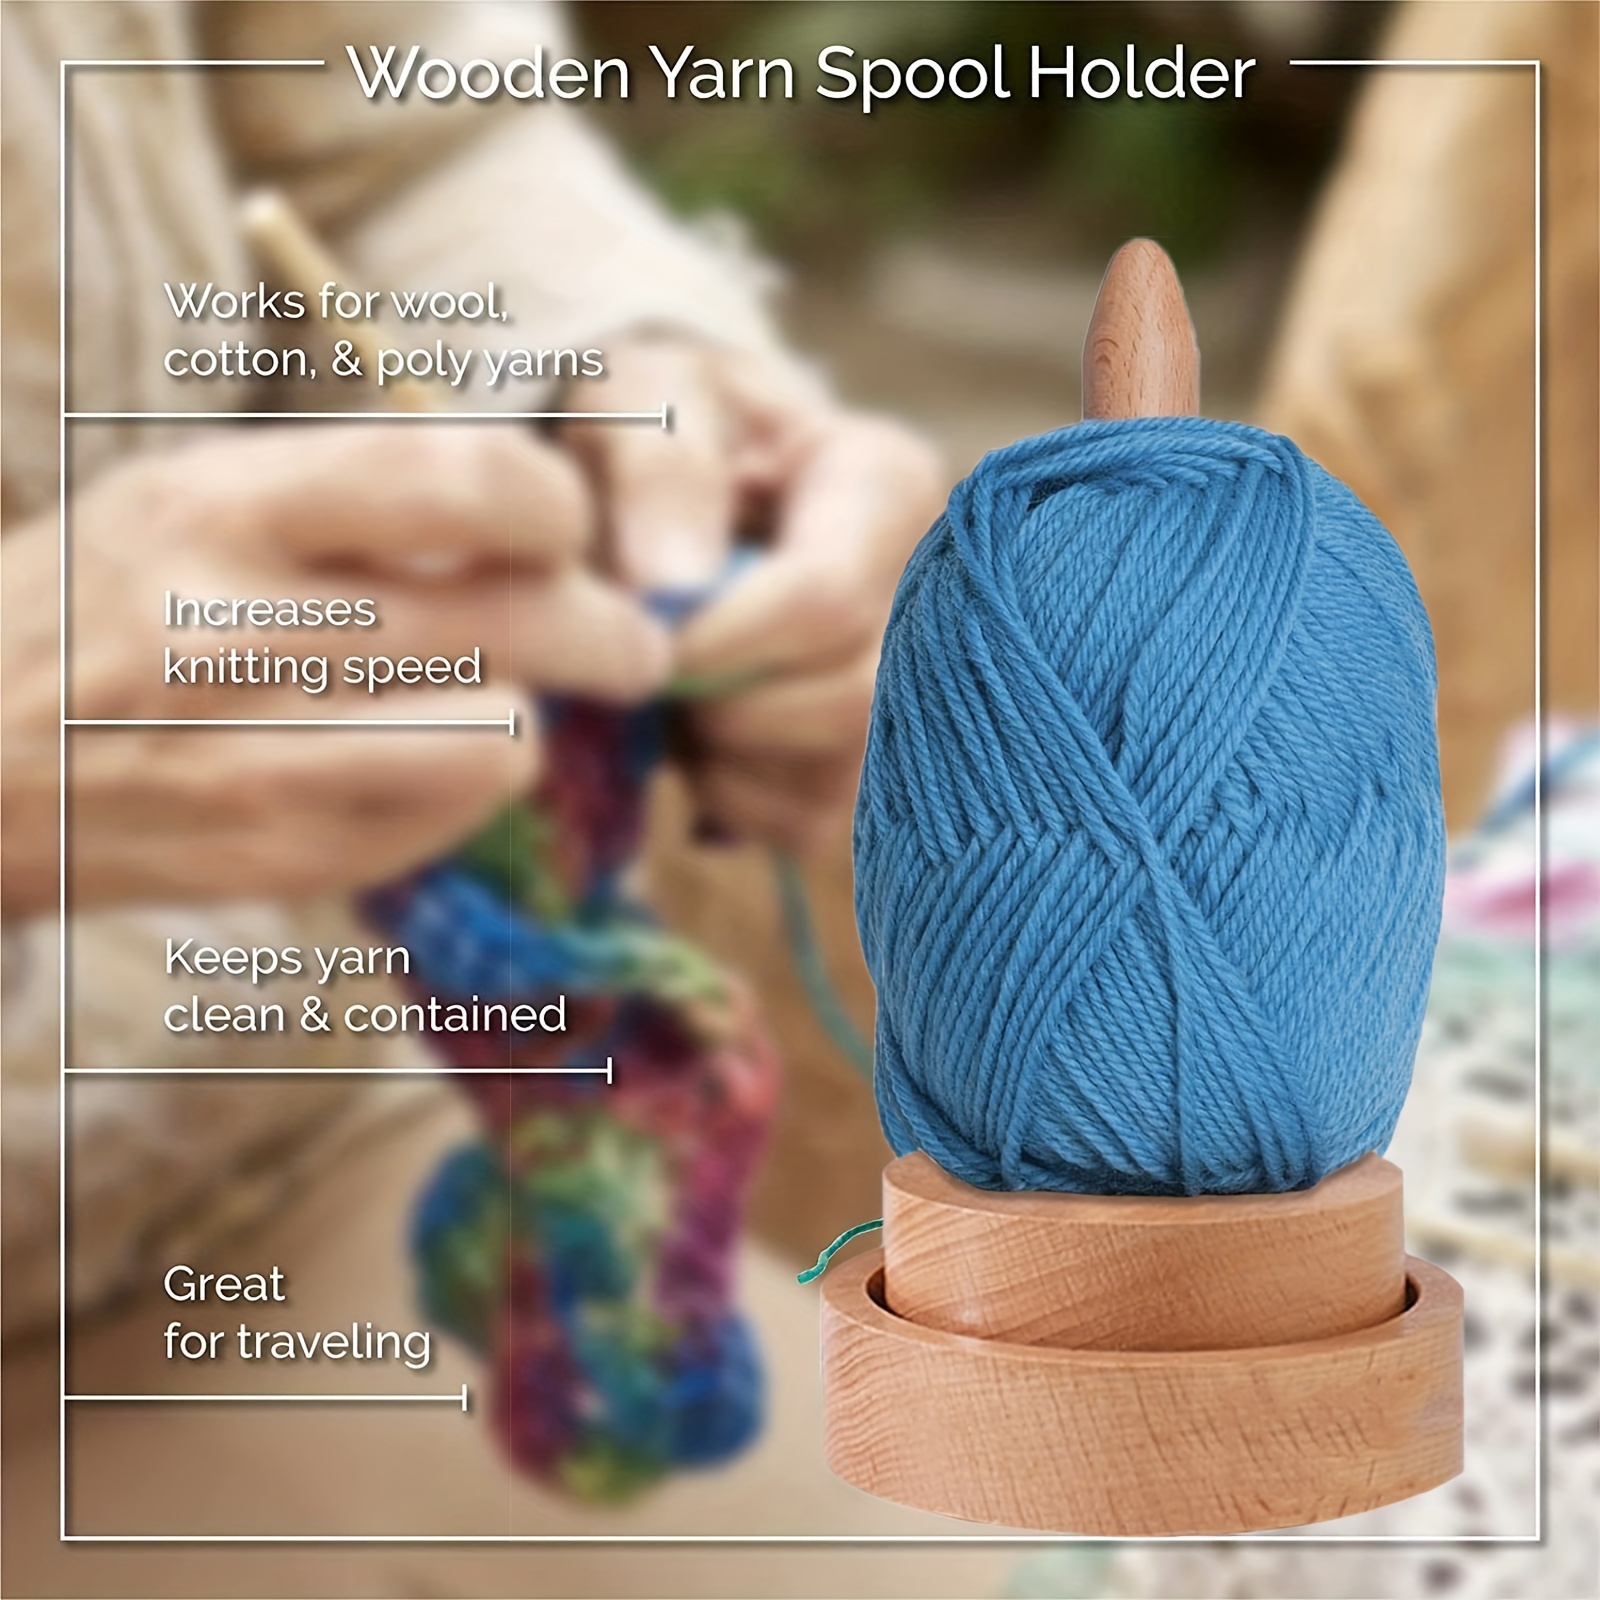 1PCS Portable Wrist Yarn Holder,Wooden Wrist Yarn Holder,Prevents